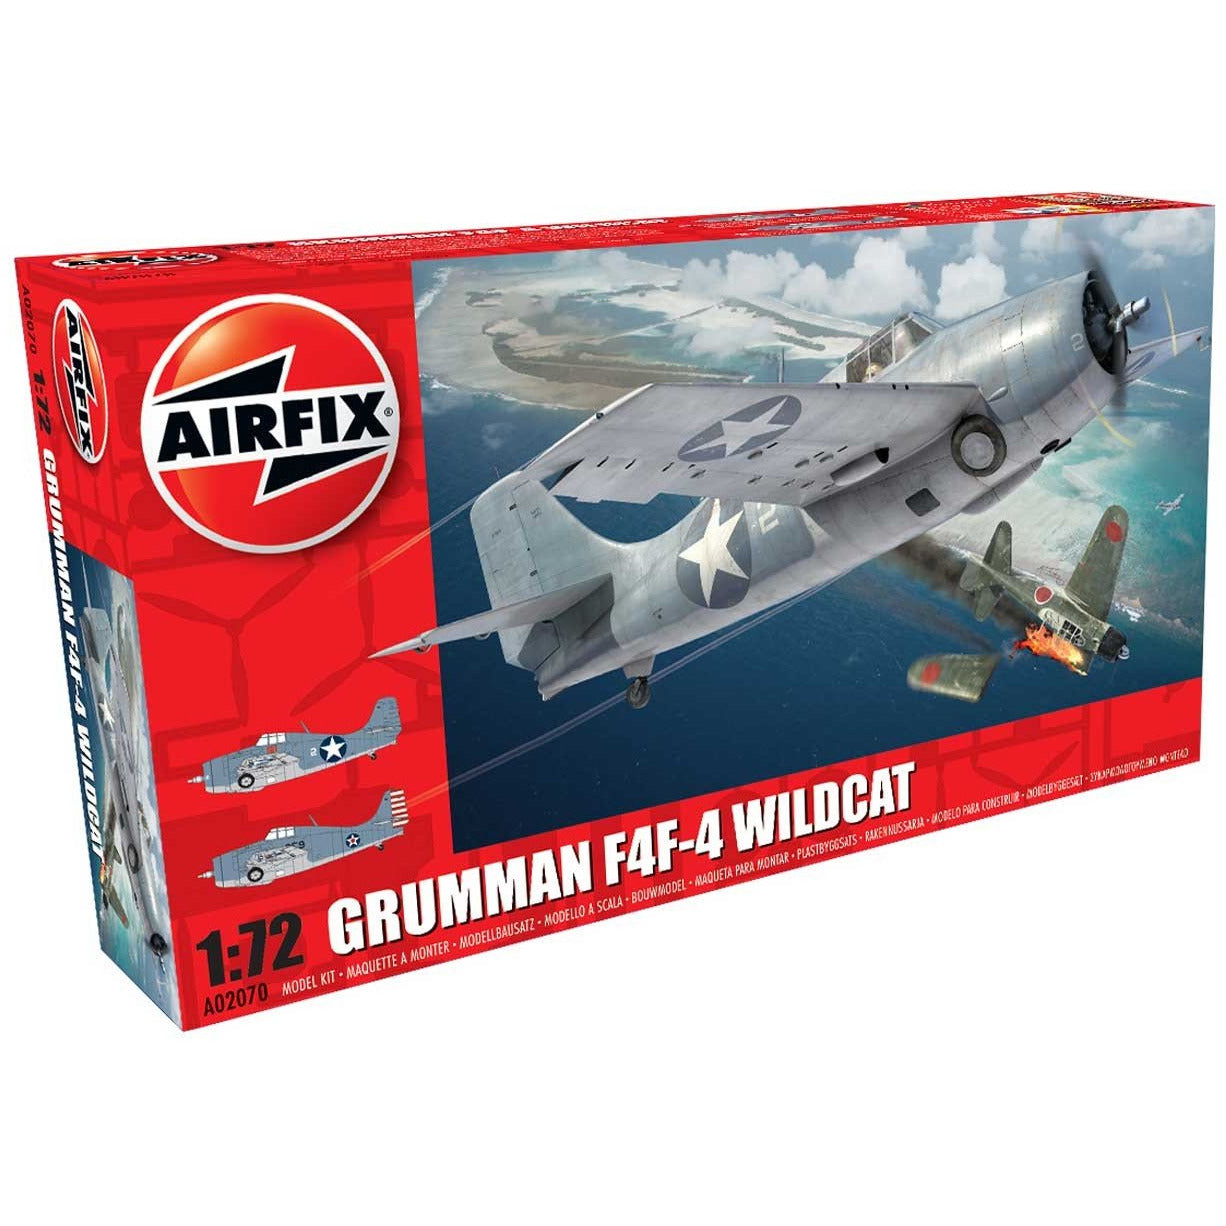 Grumman F4F-4 Wildcat 1/72 by Airfix